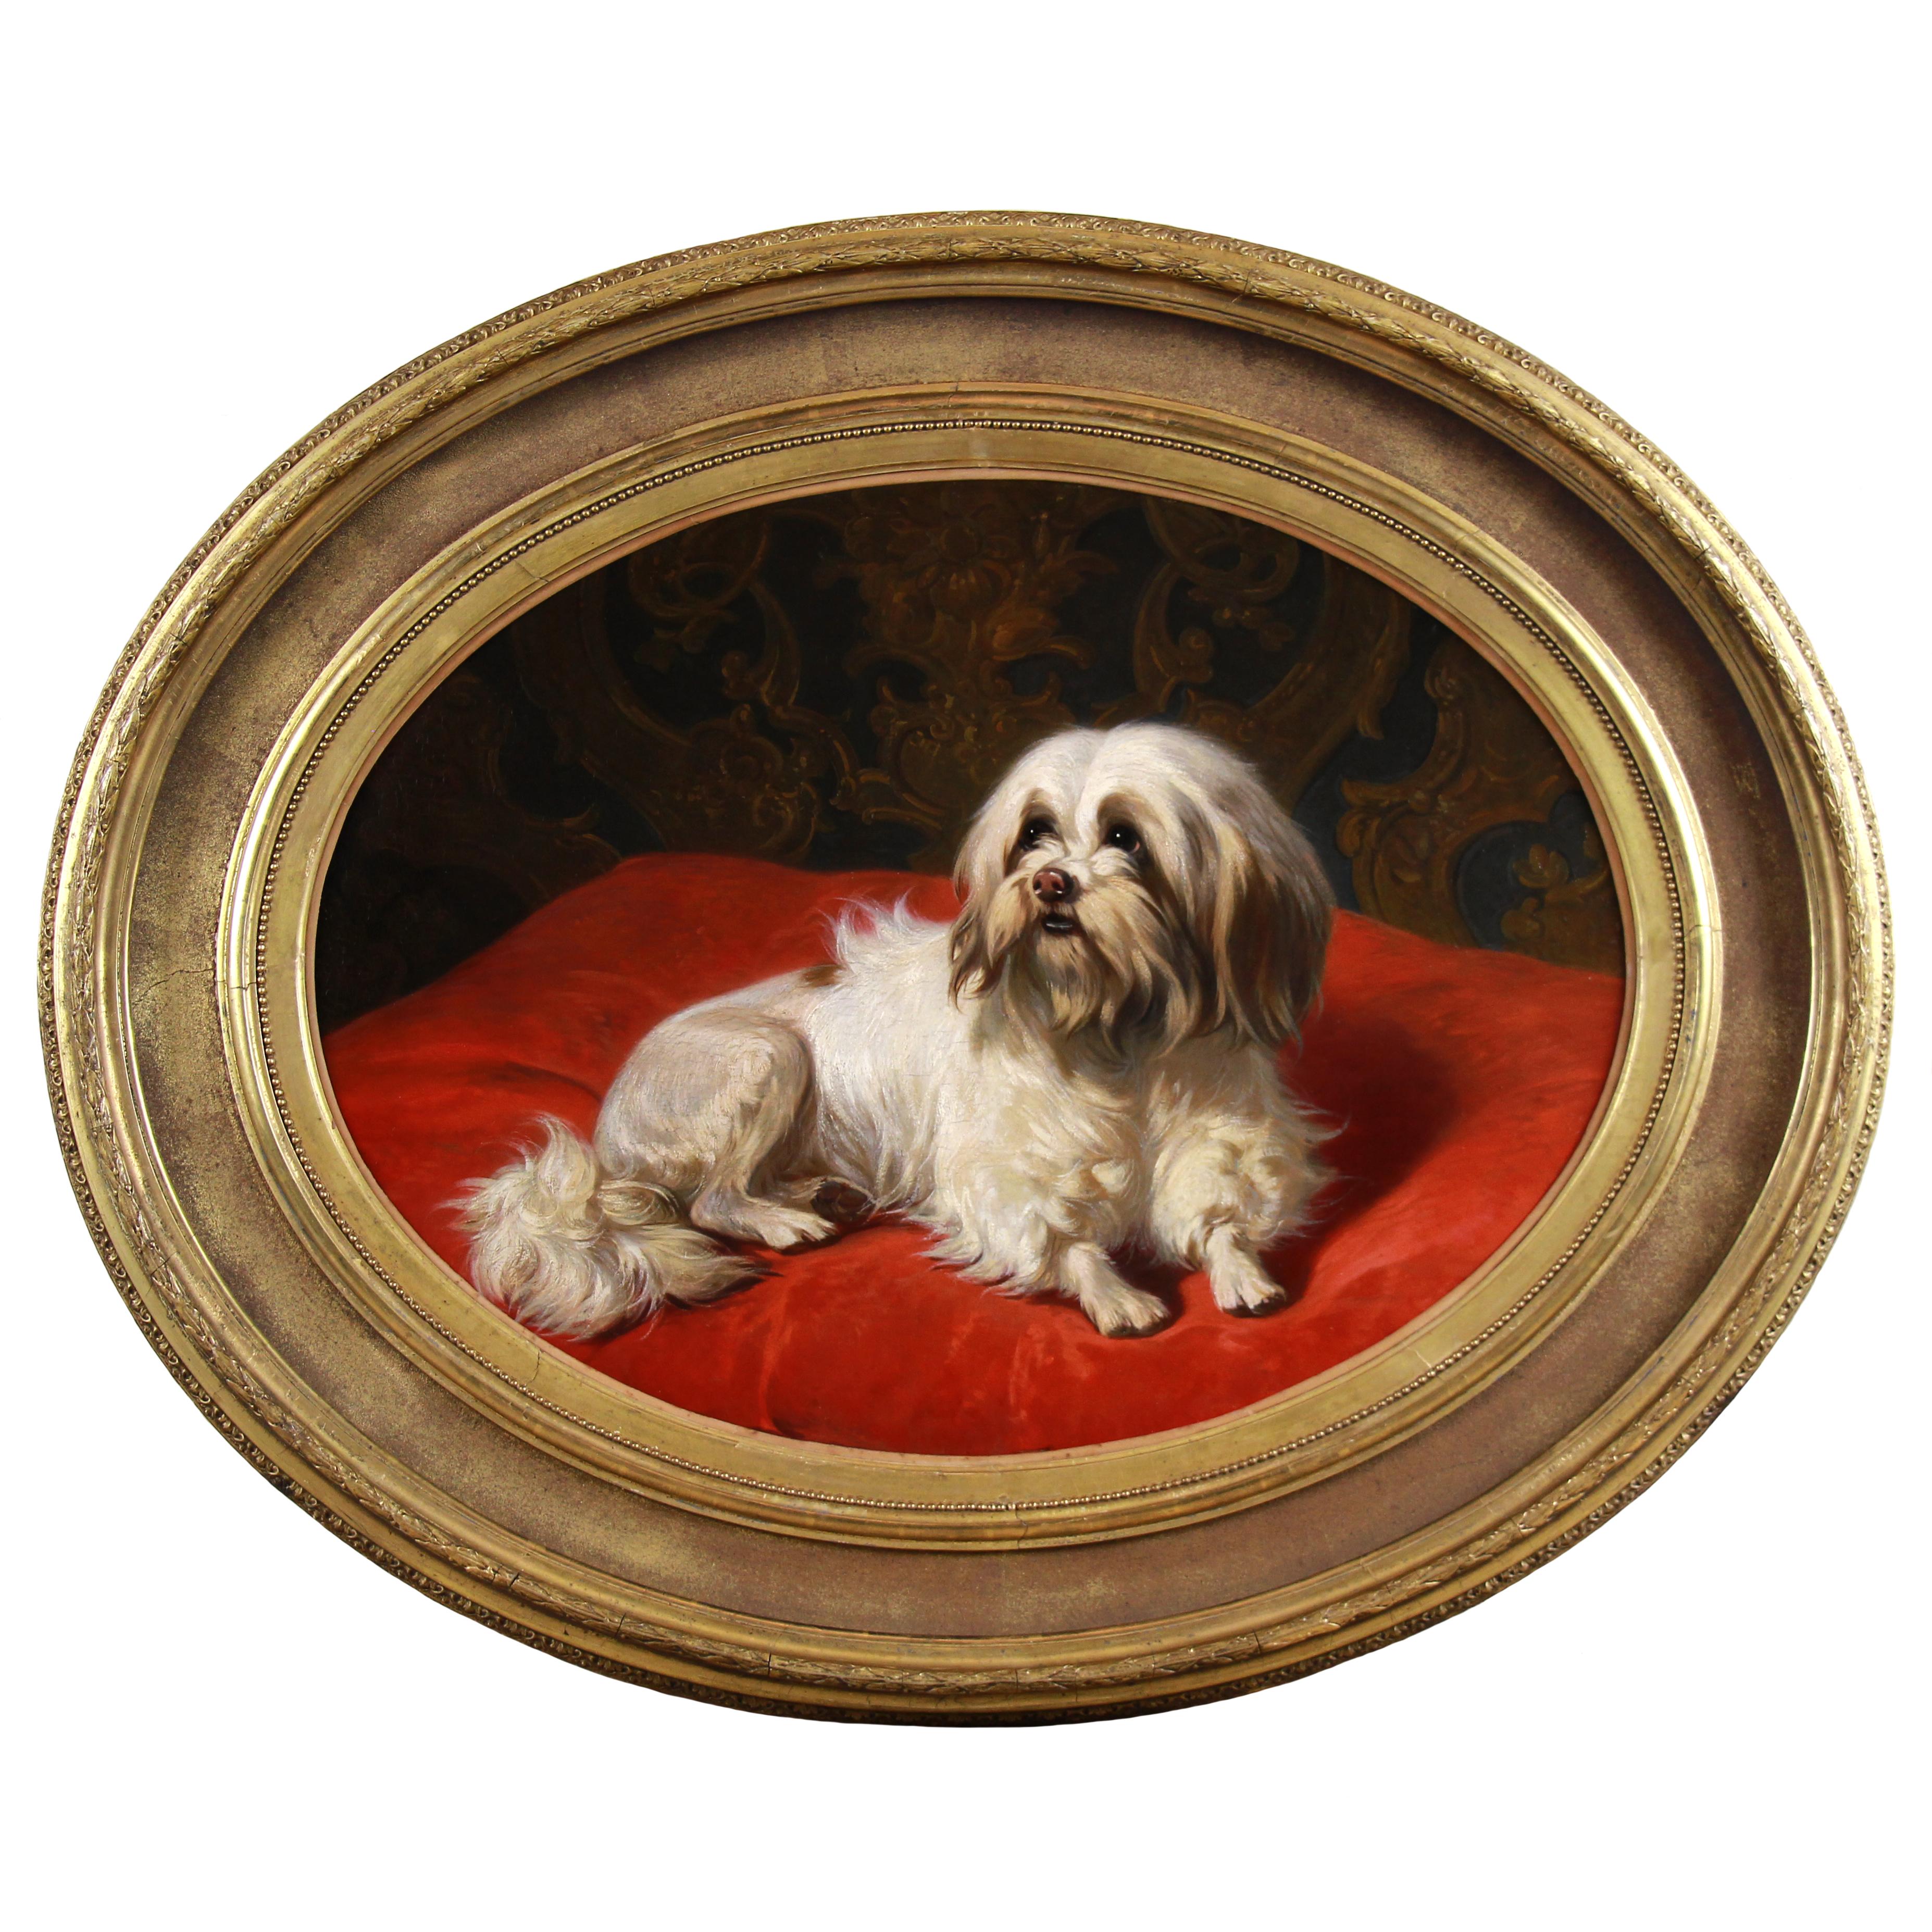 Conradijn Cunaueus Animal Painting - Oil On Panel, Portrait Of A Maltese Dog By Conradijn Cunaeus 19th